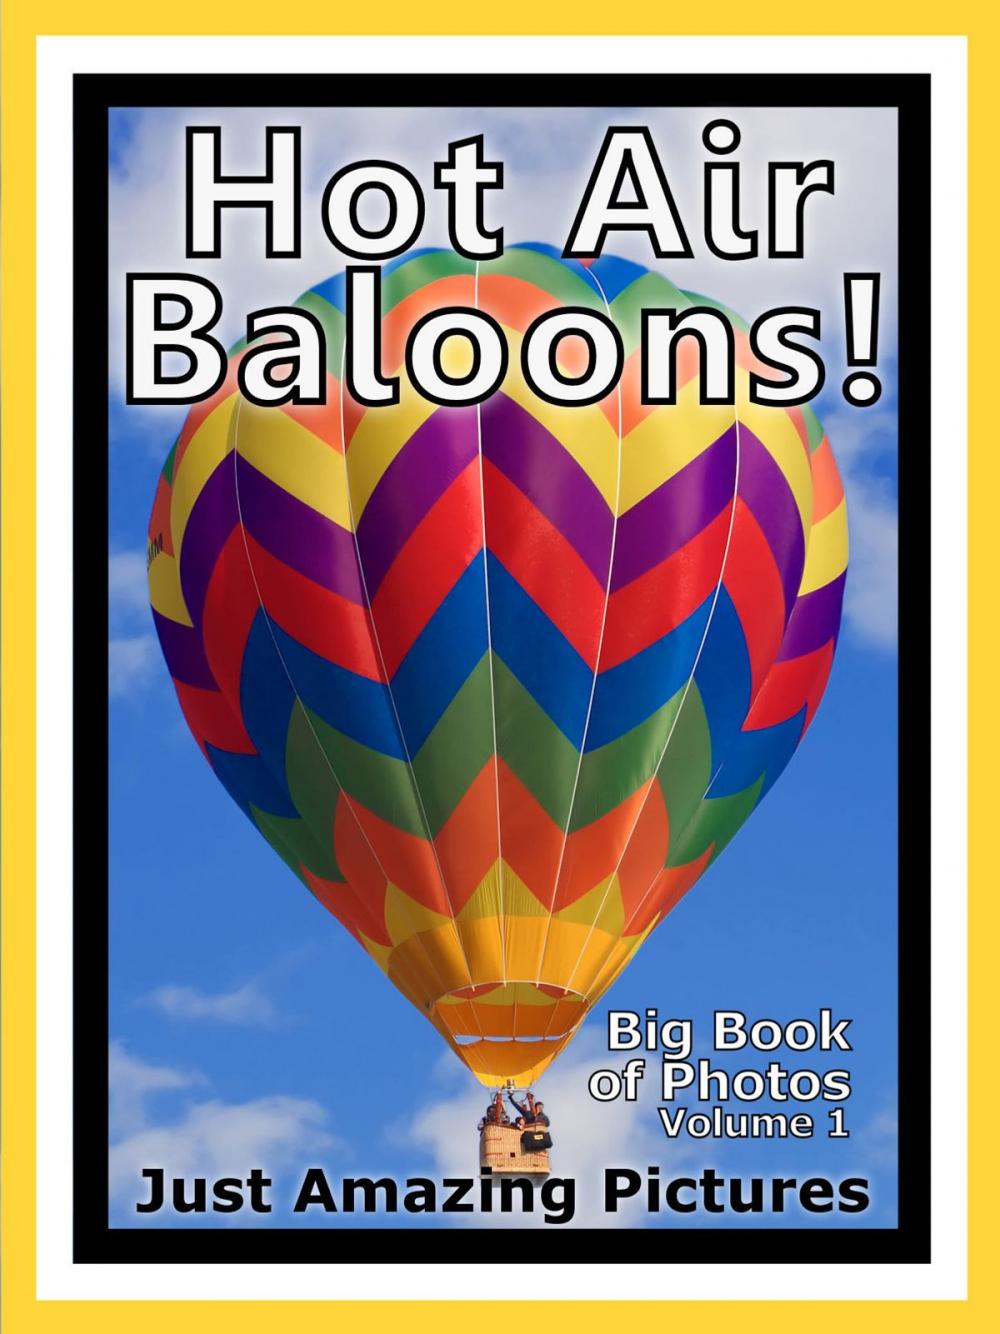 Big bigCover of Just Hot Air Balloon Photos! Big Book of Photographs & Pictures of Hot Air Balloons, Vol. 1